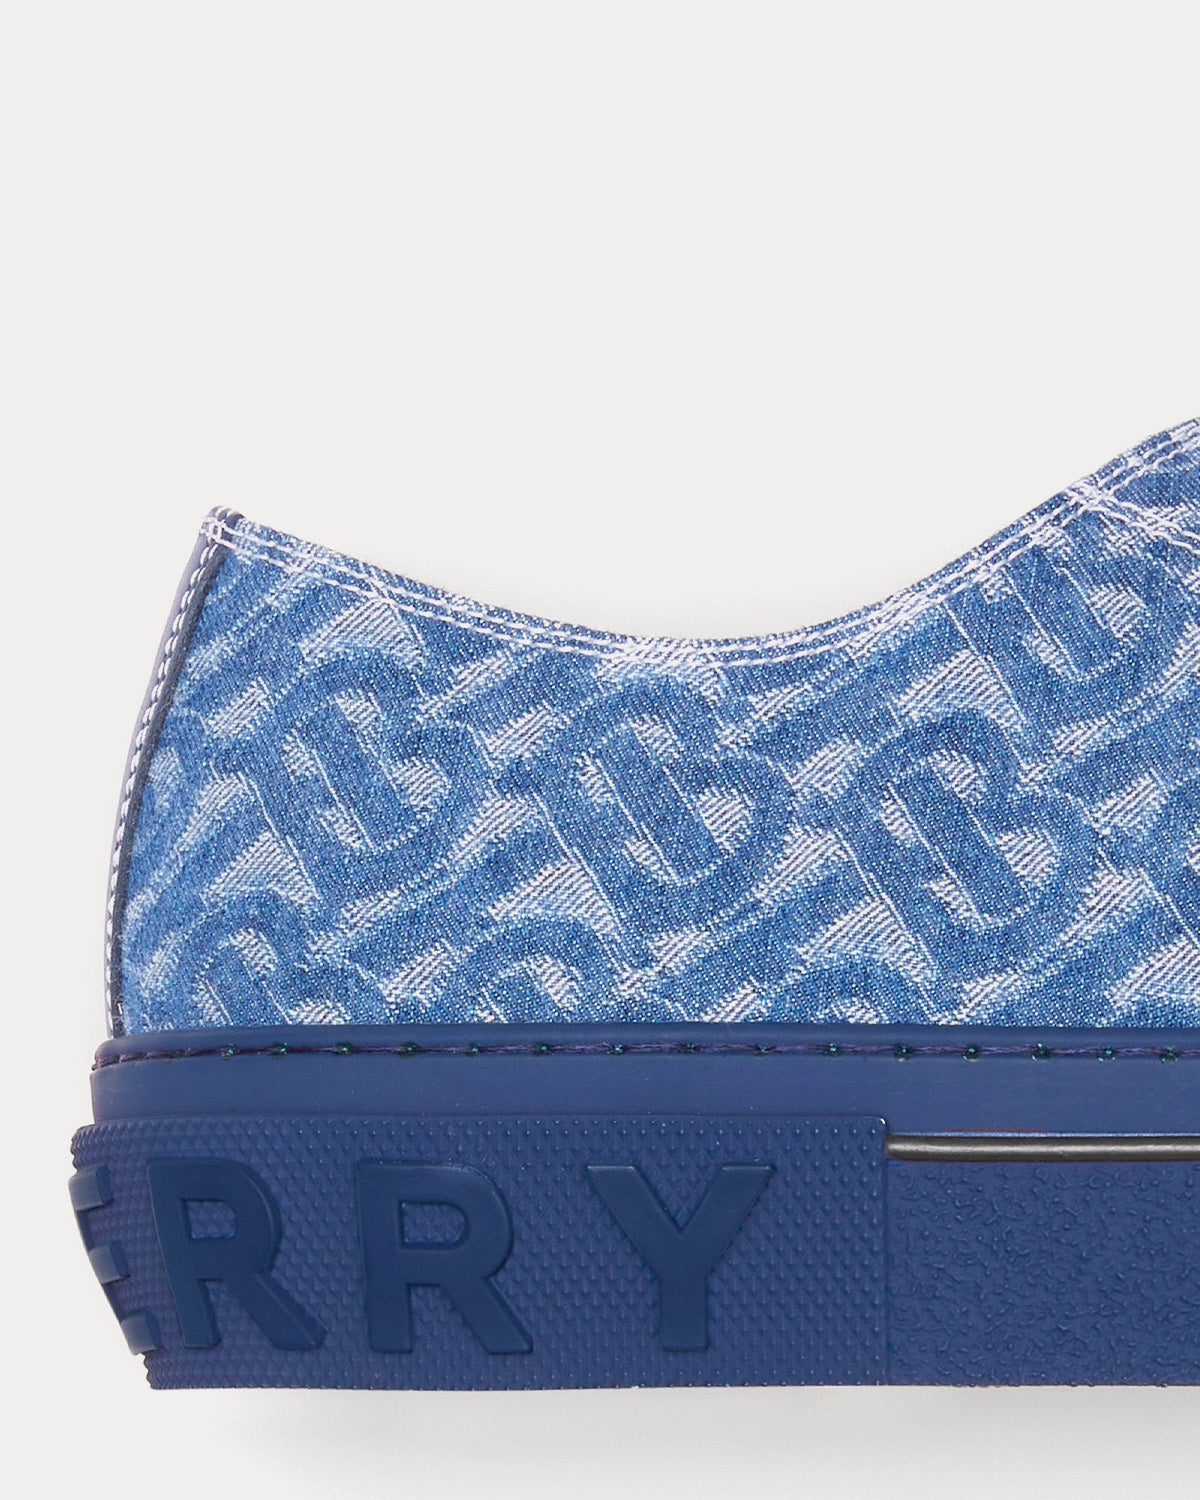 Burberry - Monogram Denim Blue Low Top Sneakers